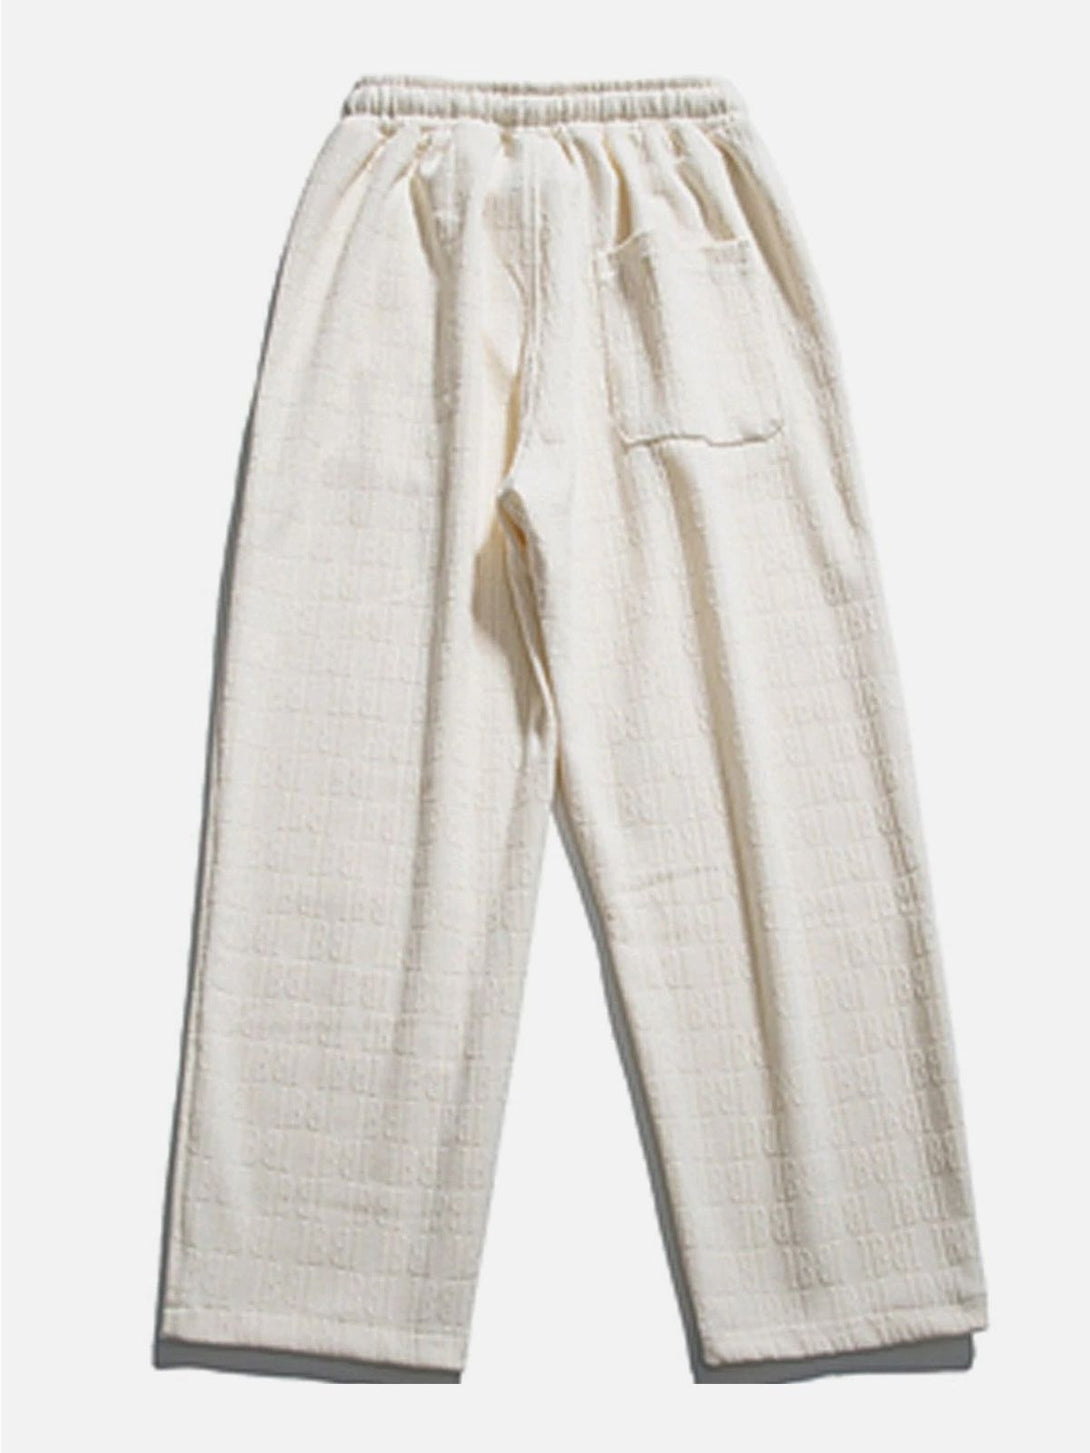 Majesda® - Pure Color Simple Sweatpants outfit ideas streetwear fashion